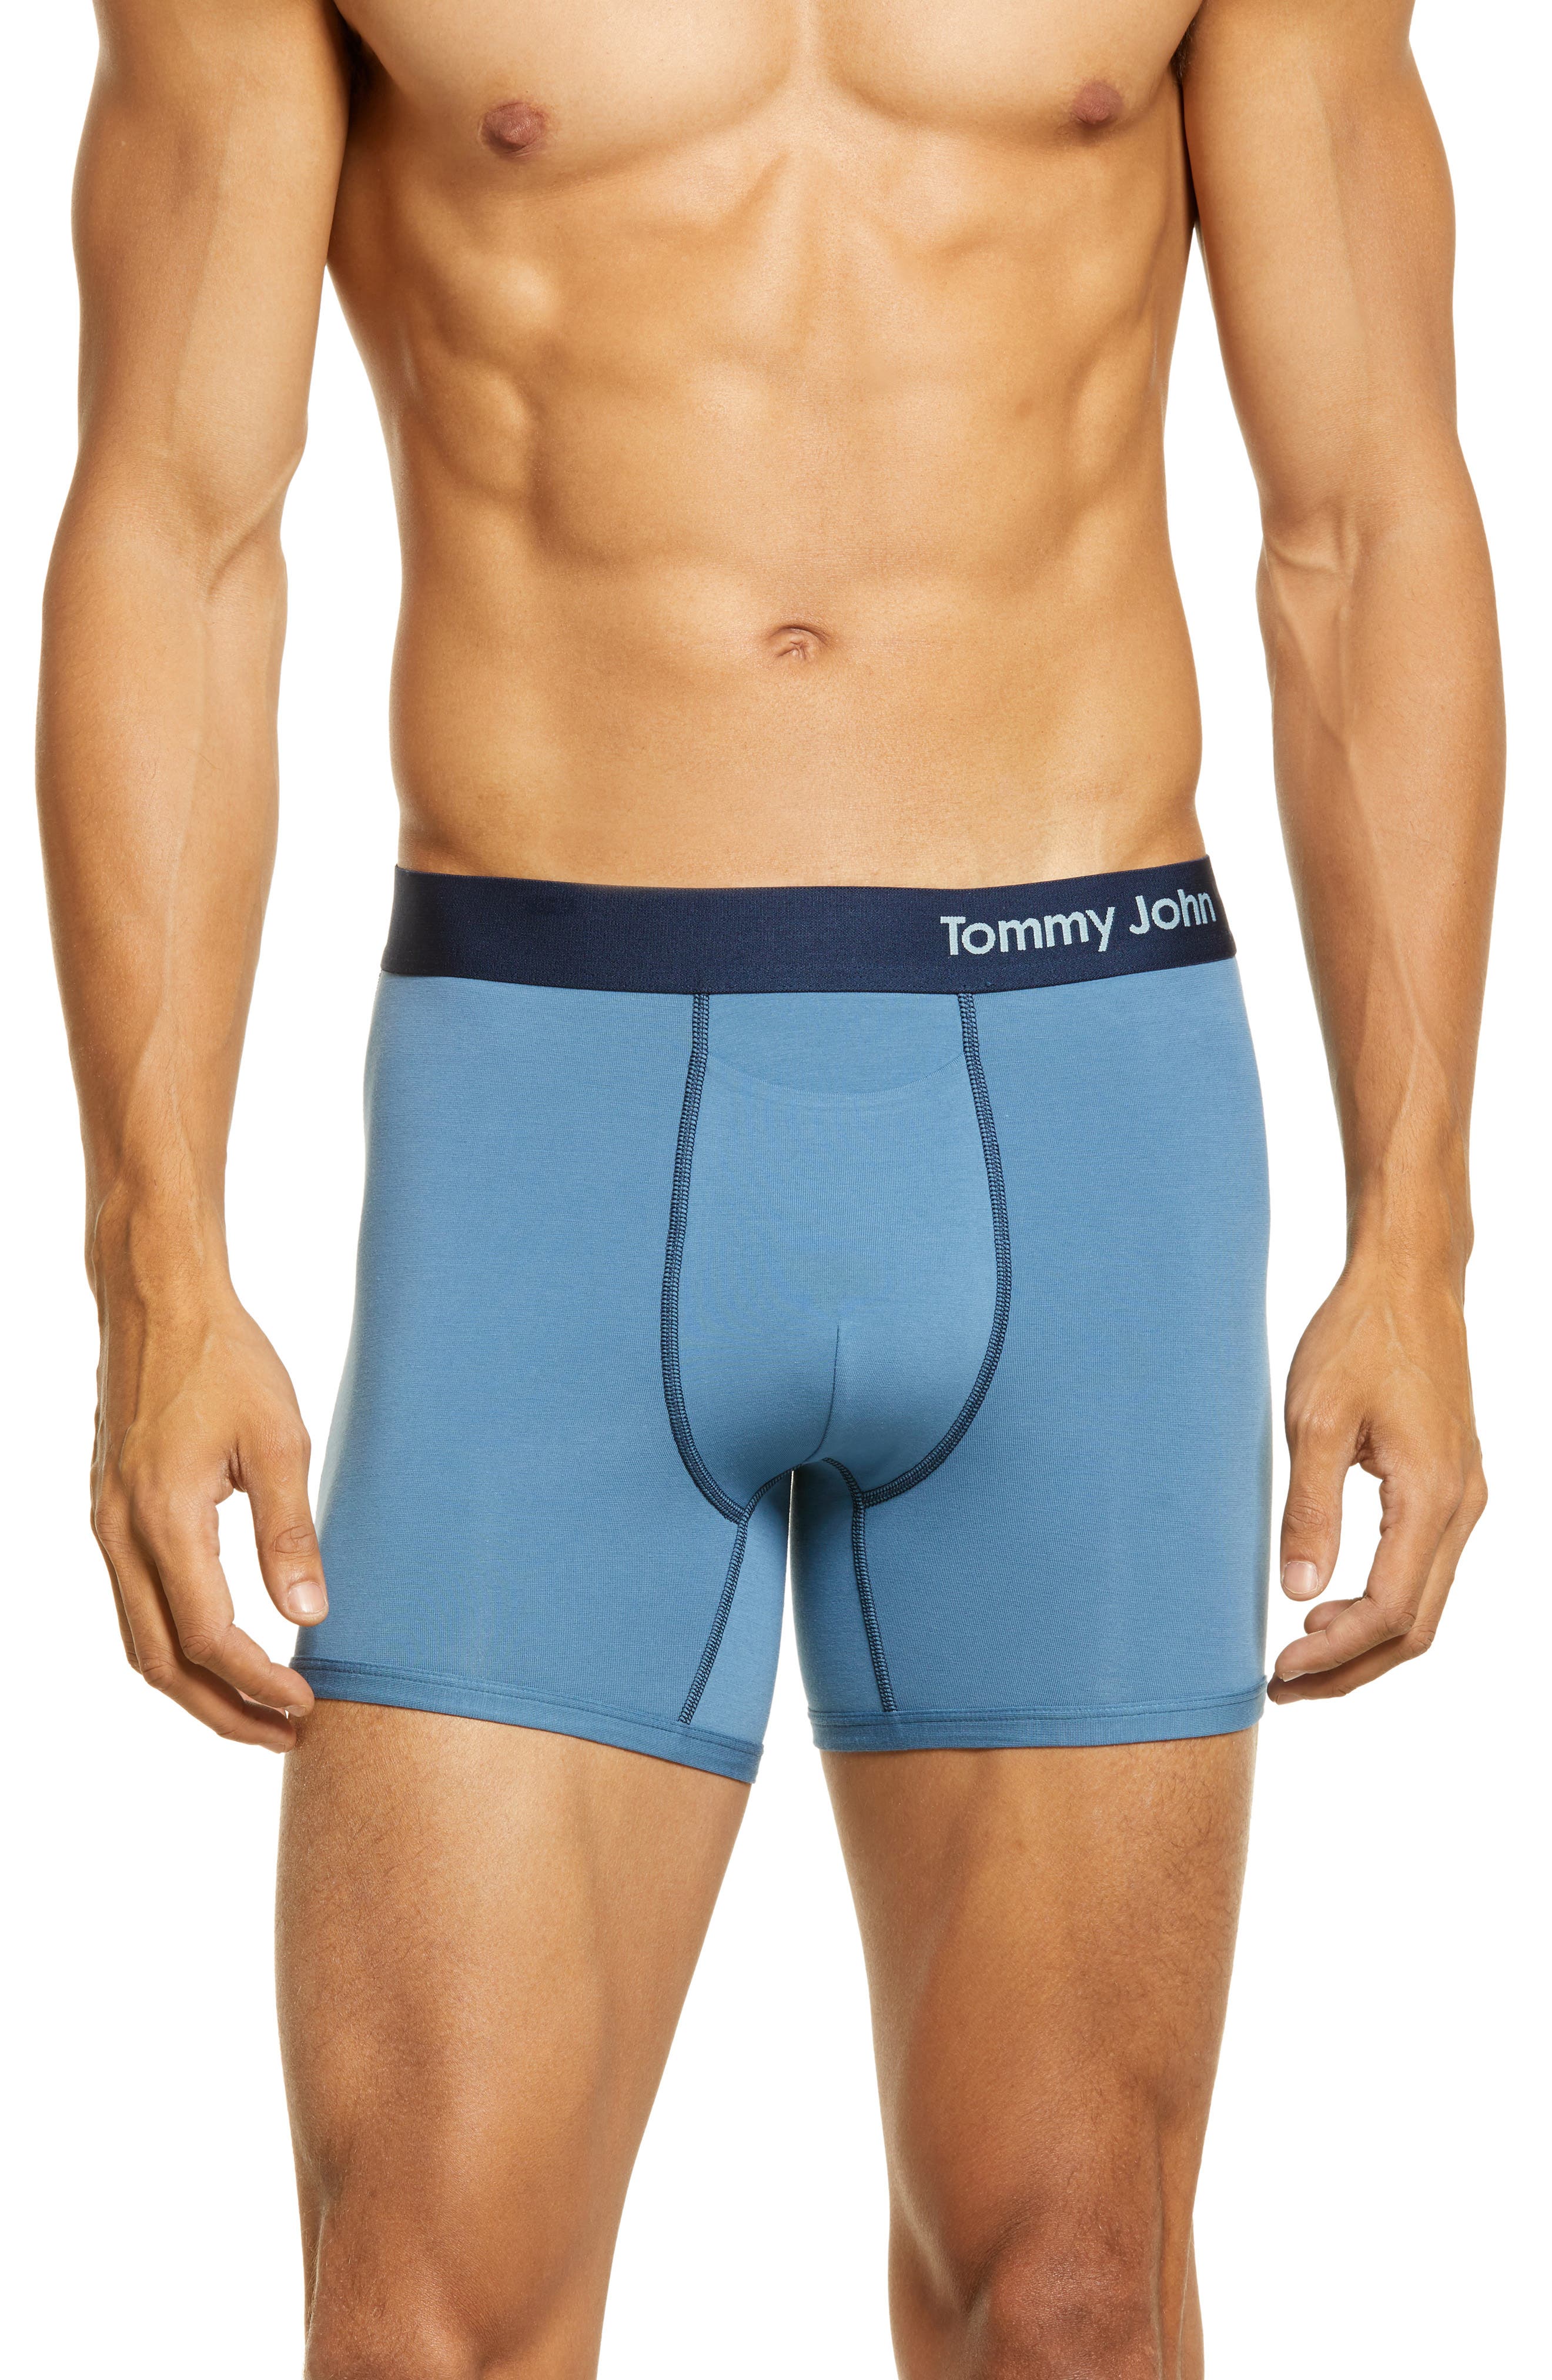 tommy john underwear big and tall